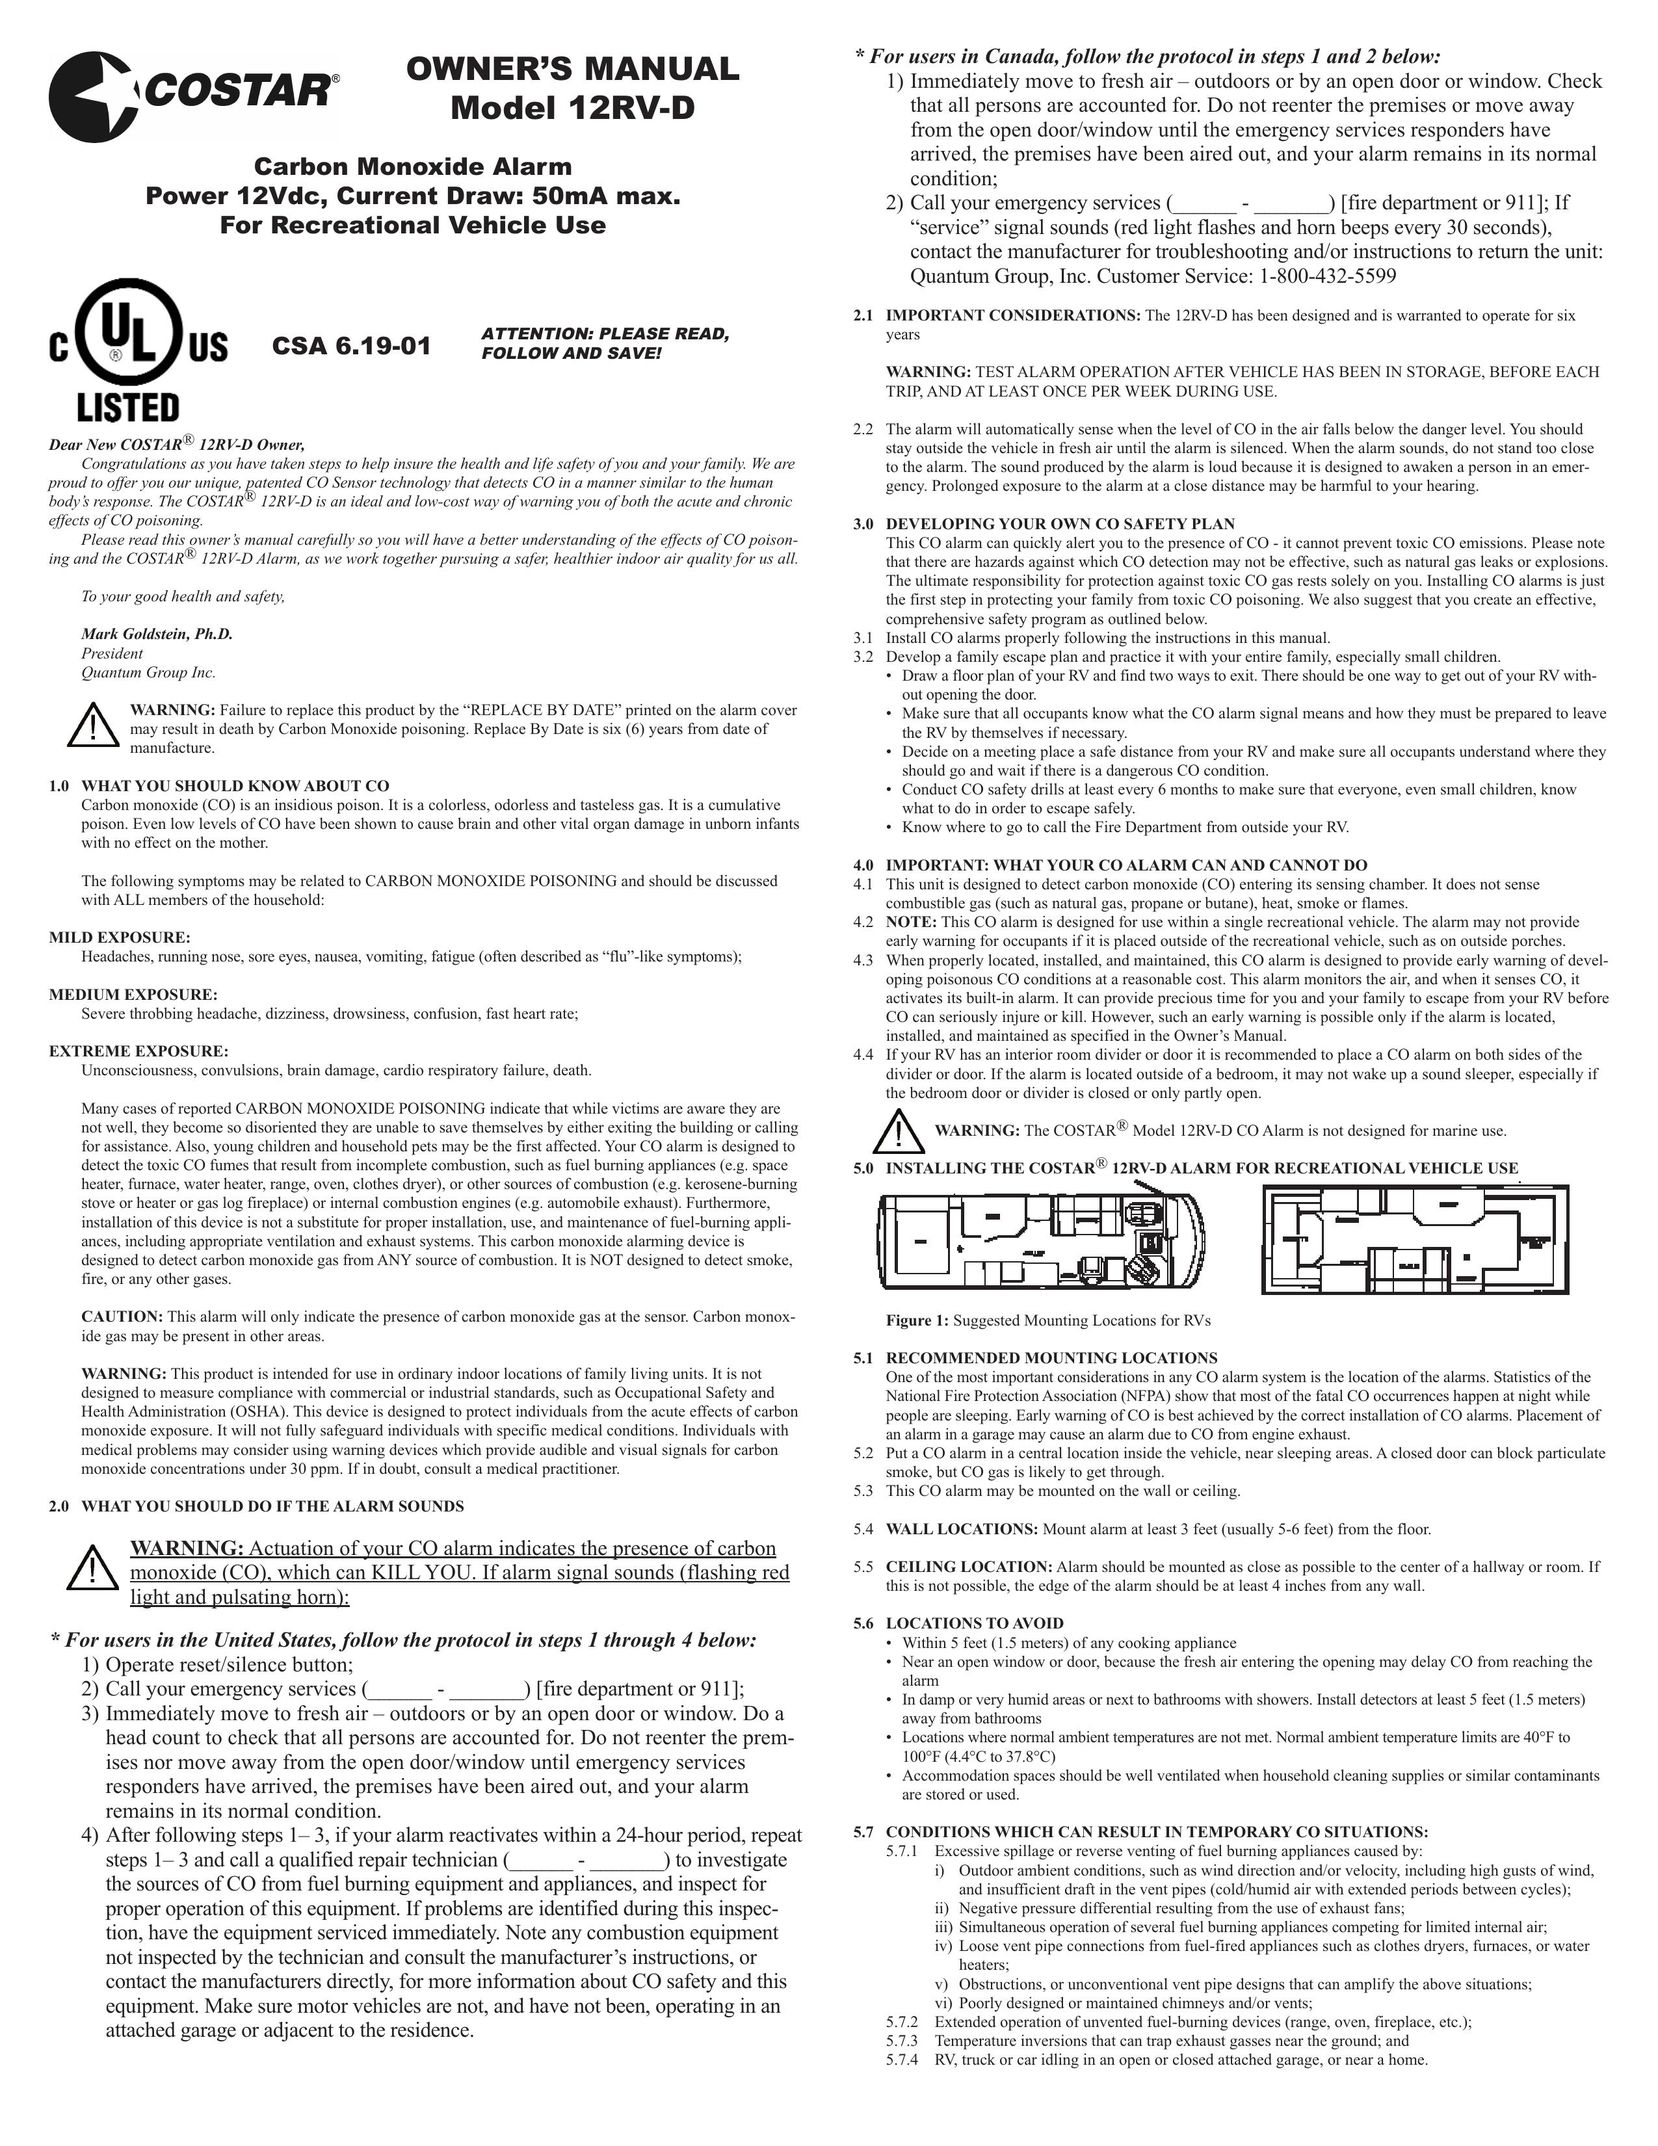 Costar 12RV-D Carbon Monoxide Alarm User Manual